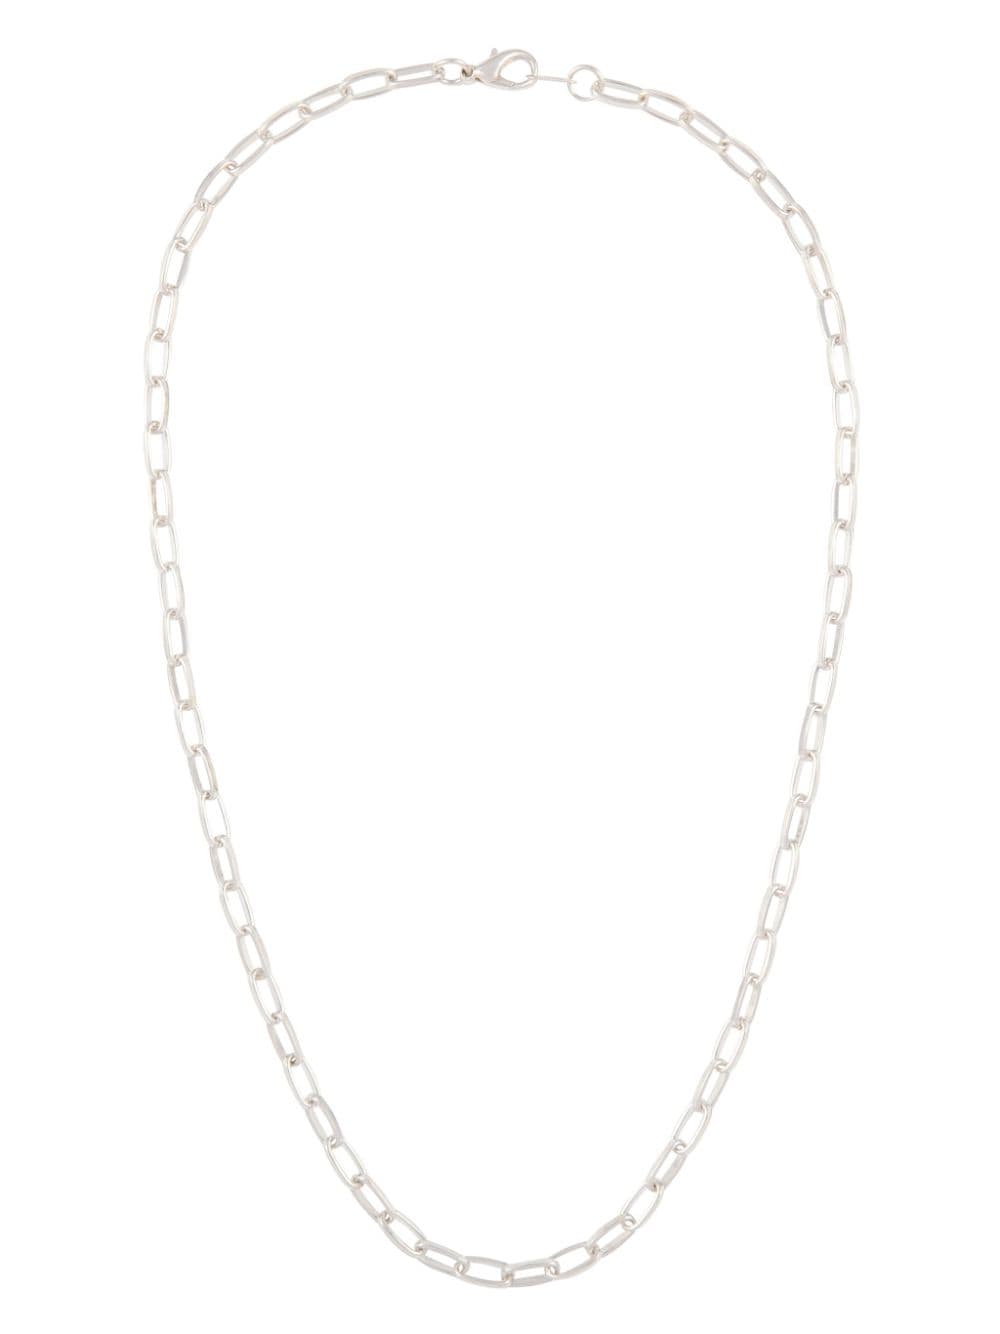 Susan Caplan Vintage 1980s chain-link necklace - Silver von Susan Caplan Vintage